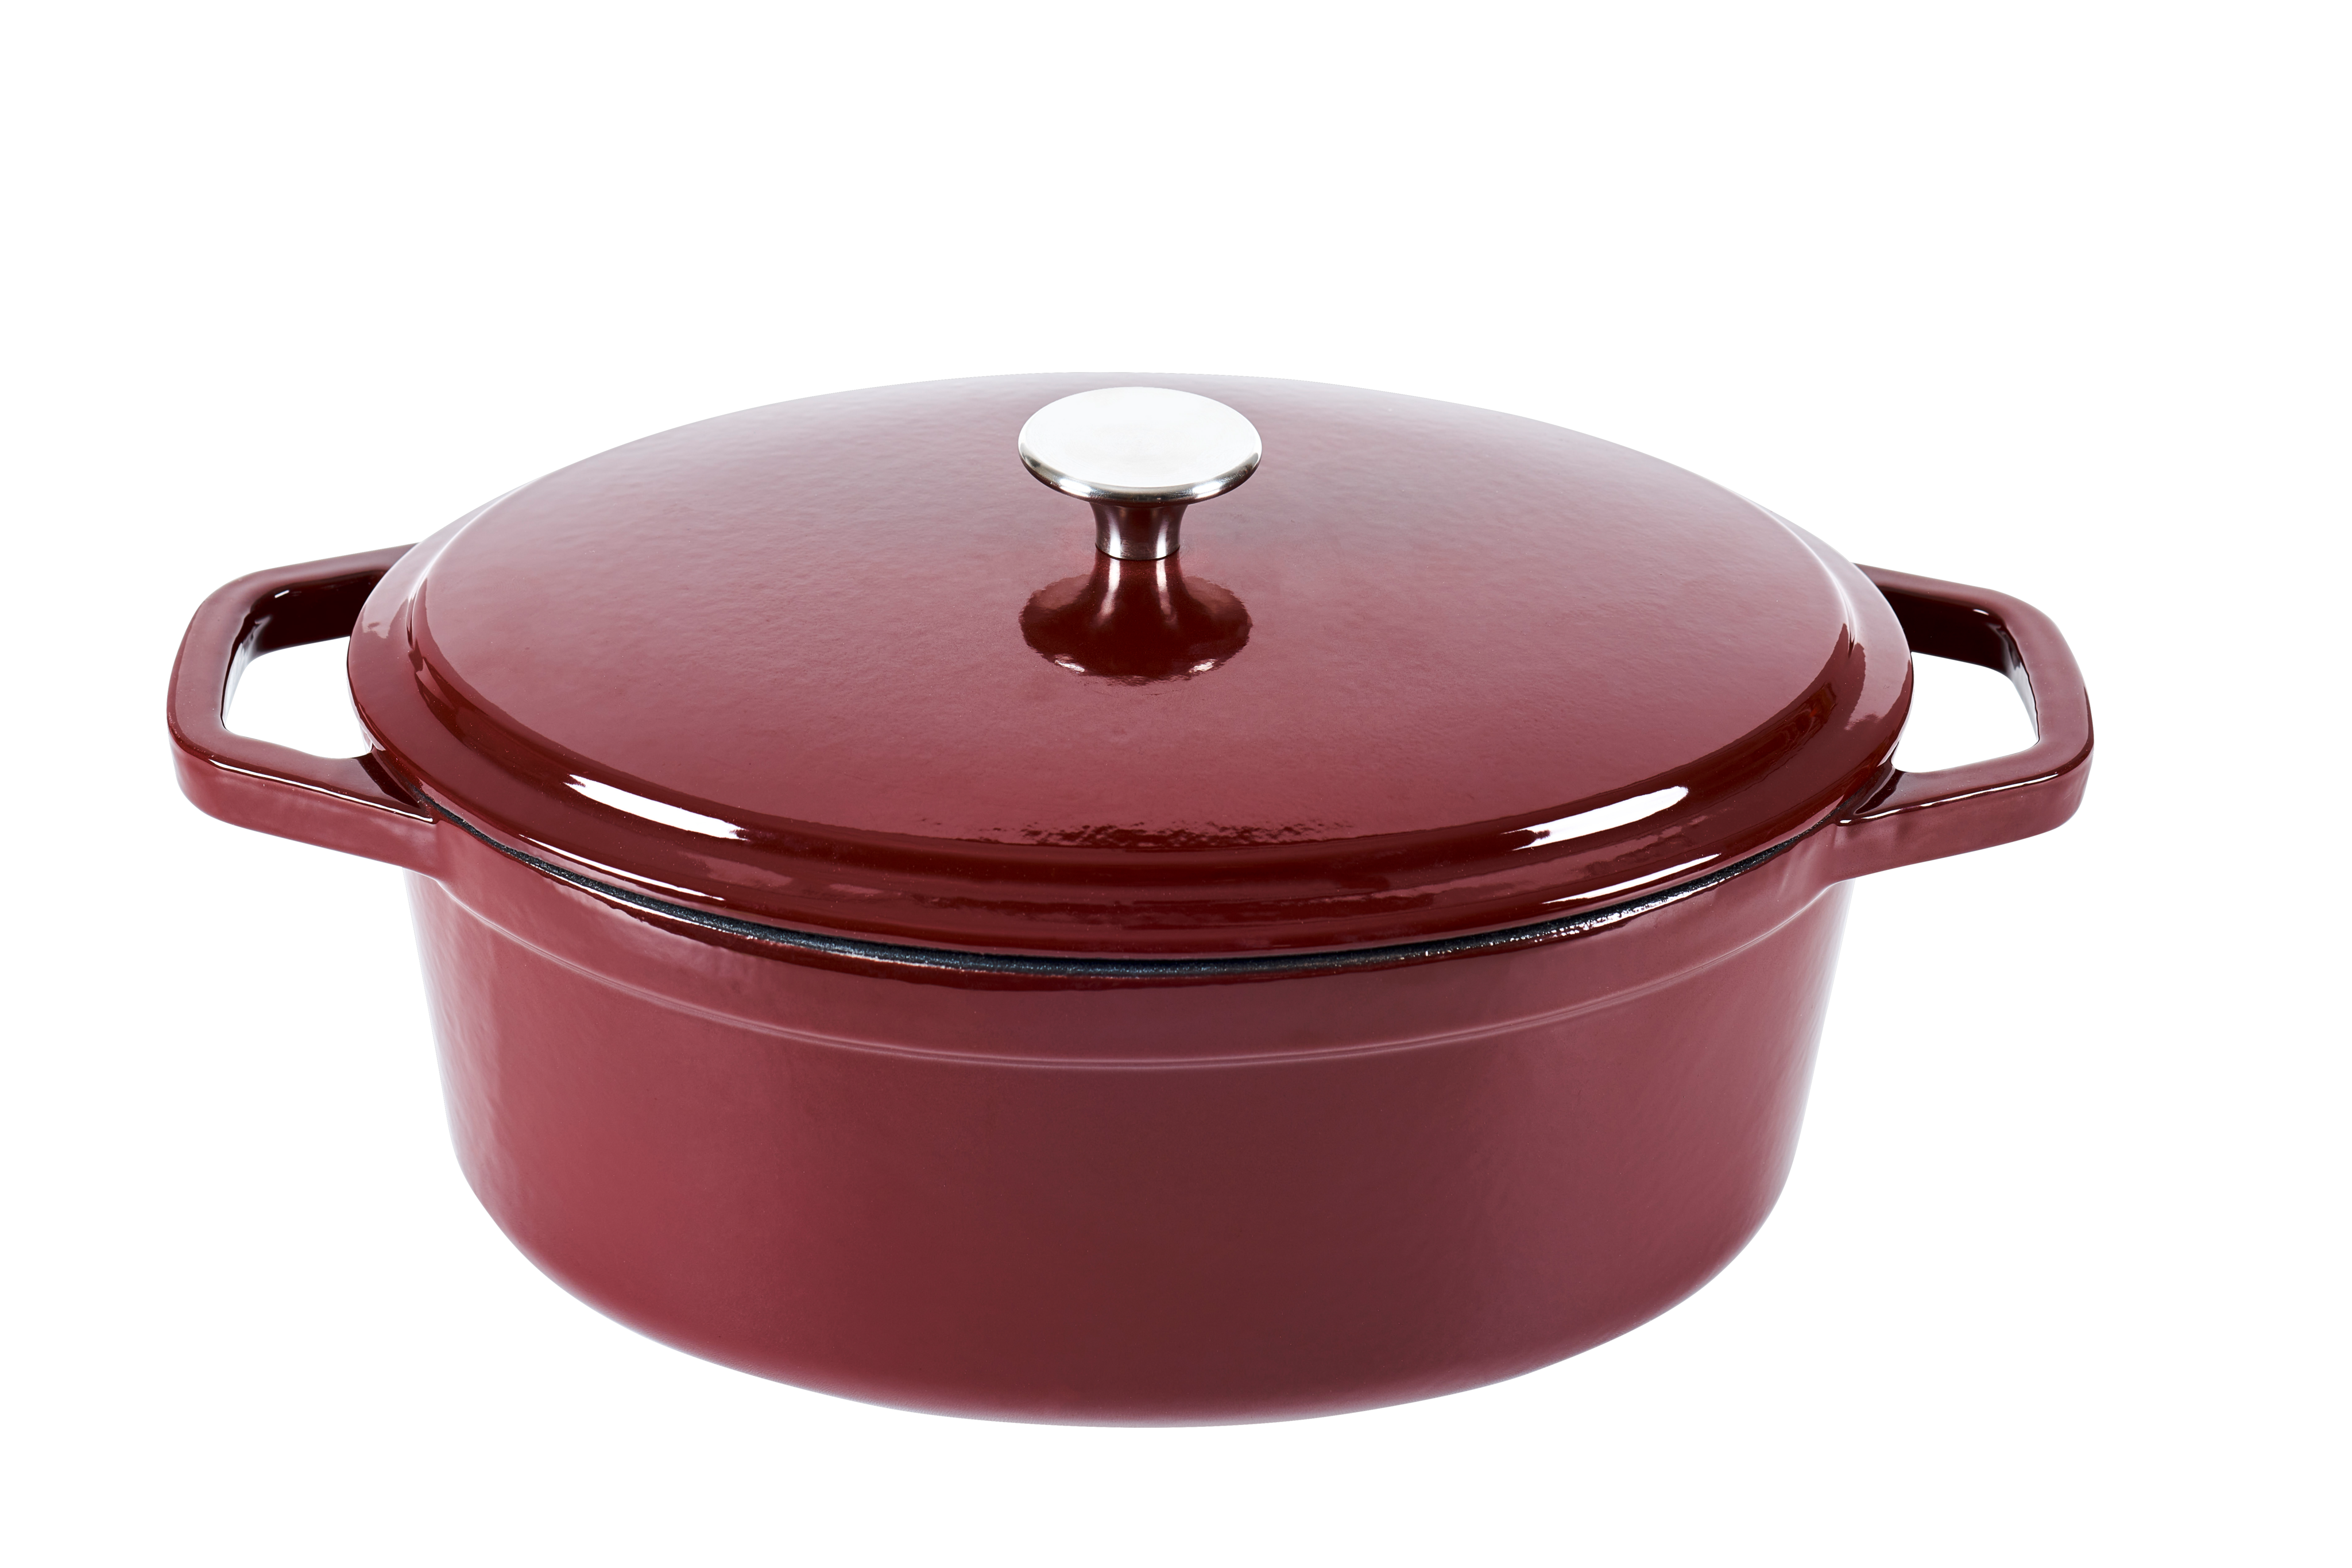 Olla de Hierro – Traditional Stew Pot